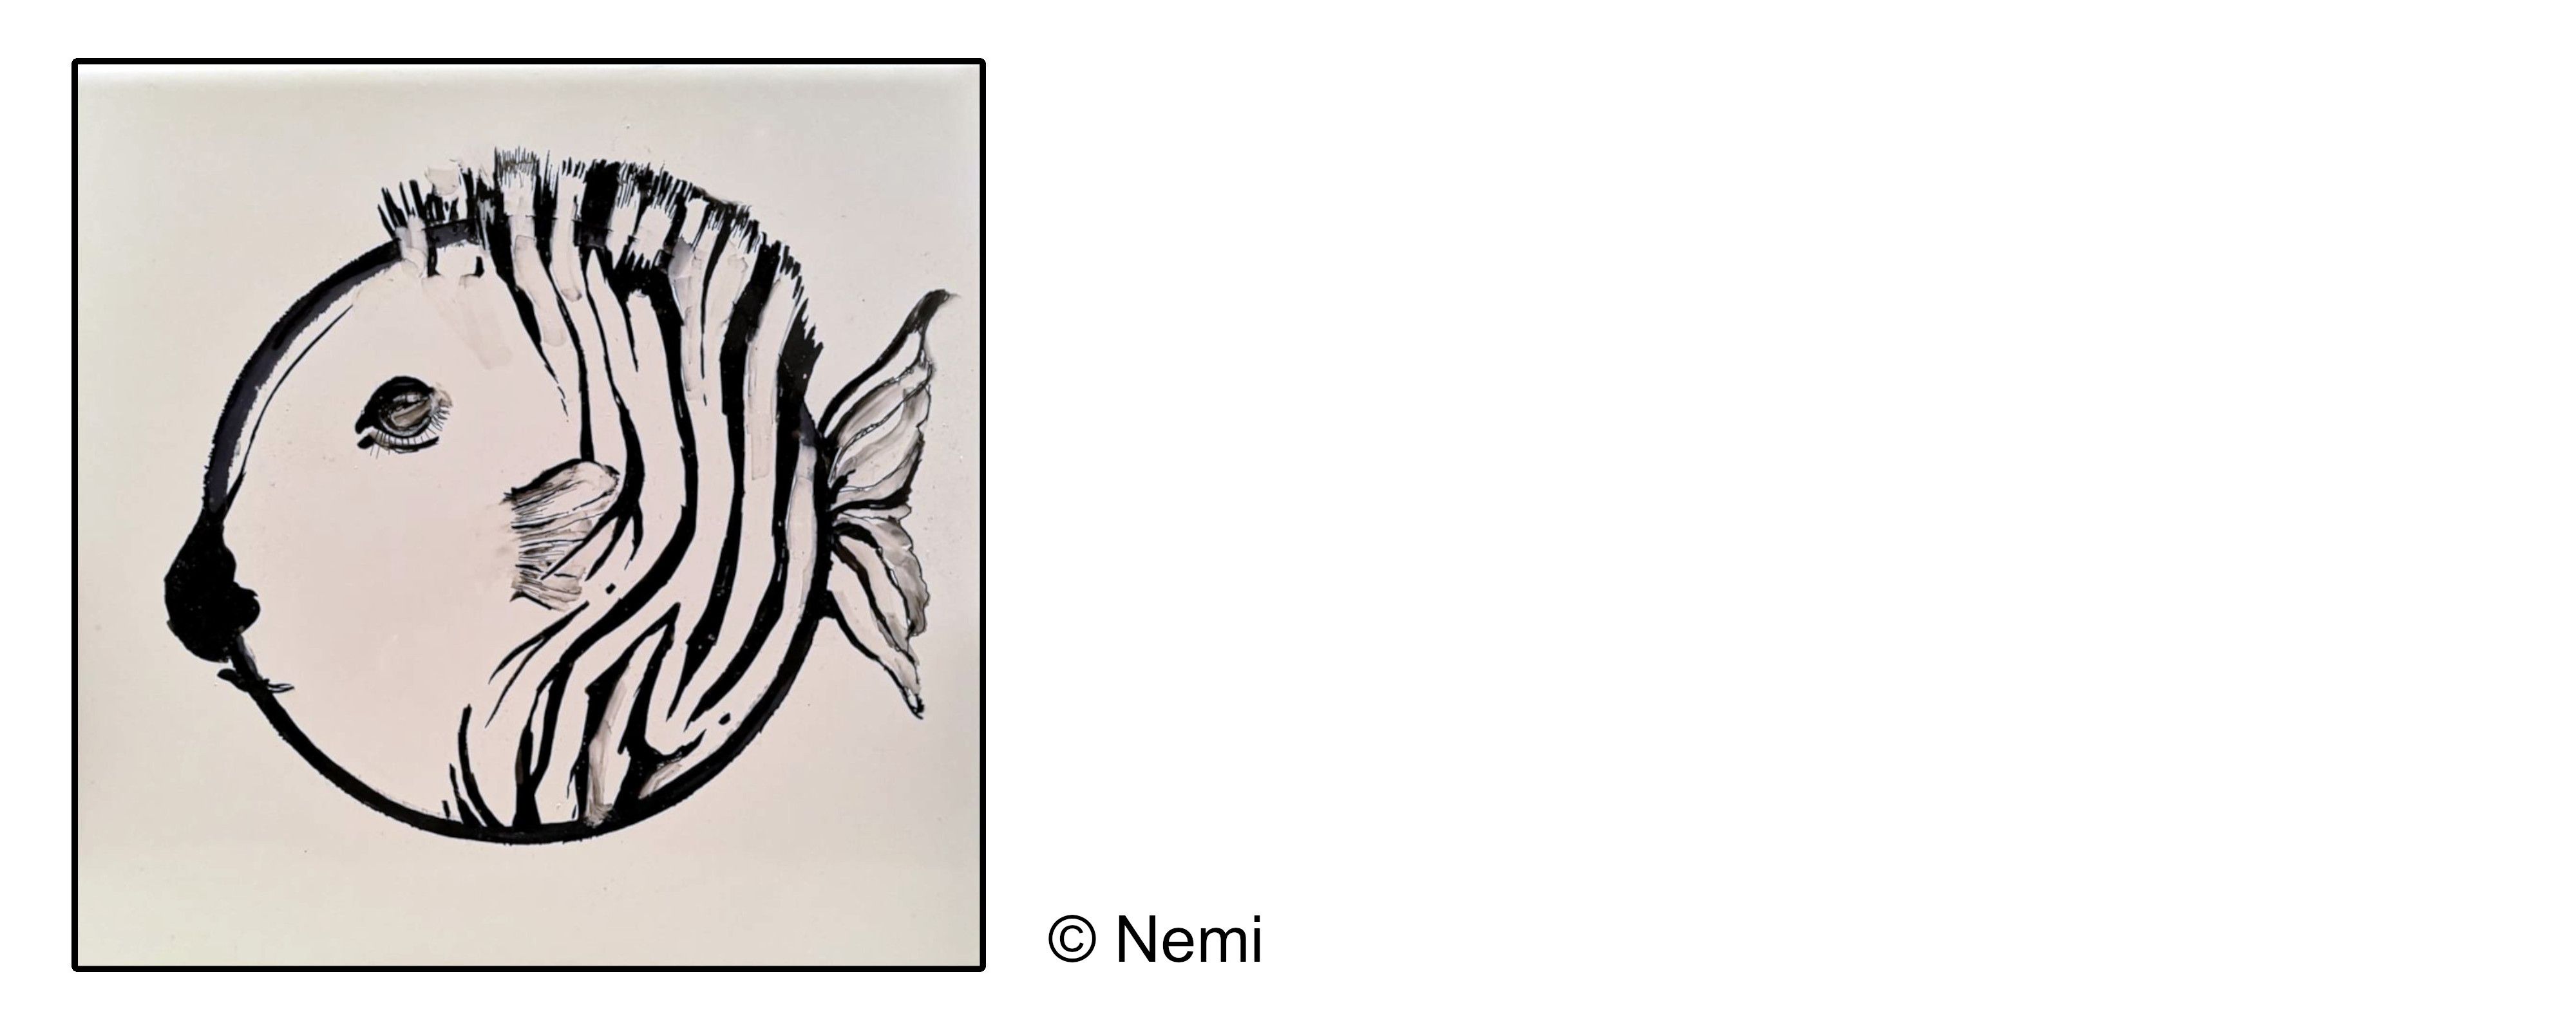 L'oeuvre de Nemi sur carreau © Nemi